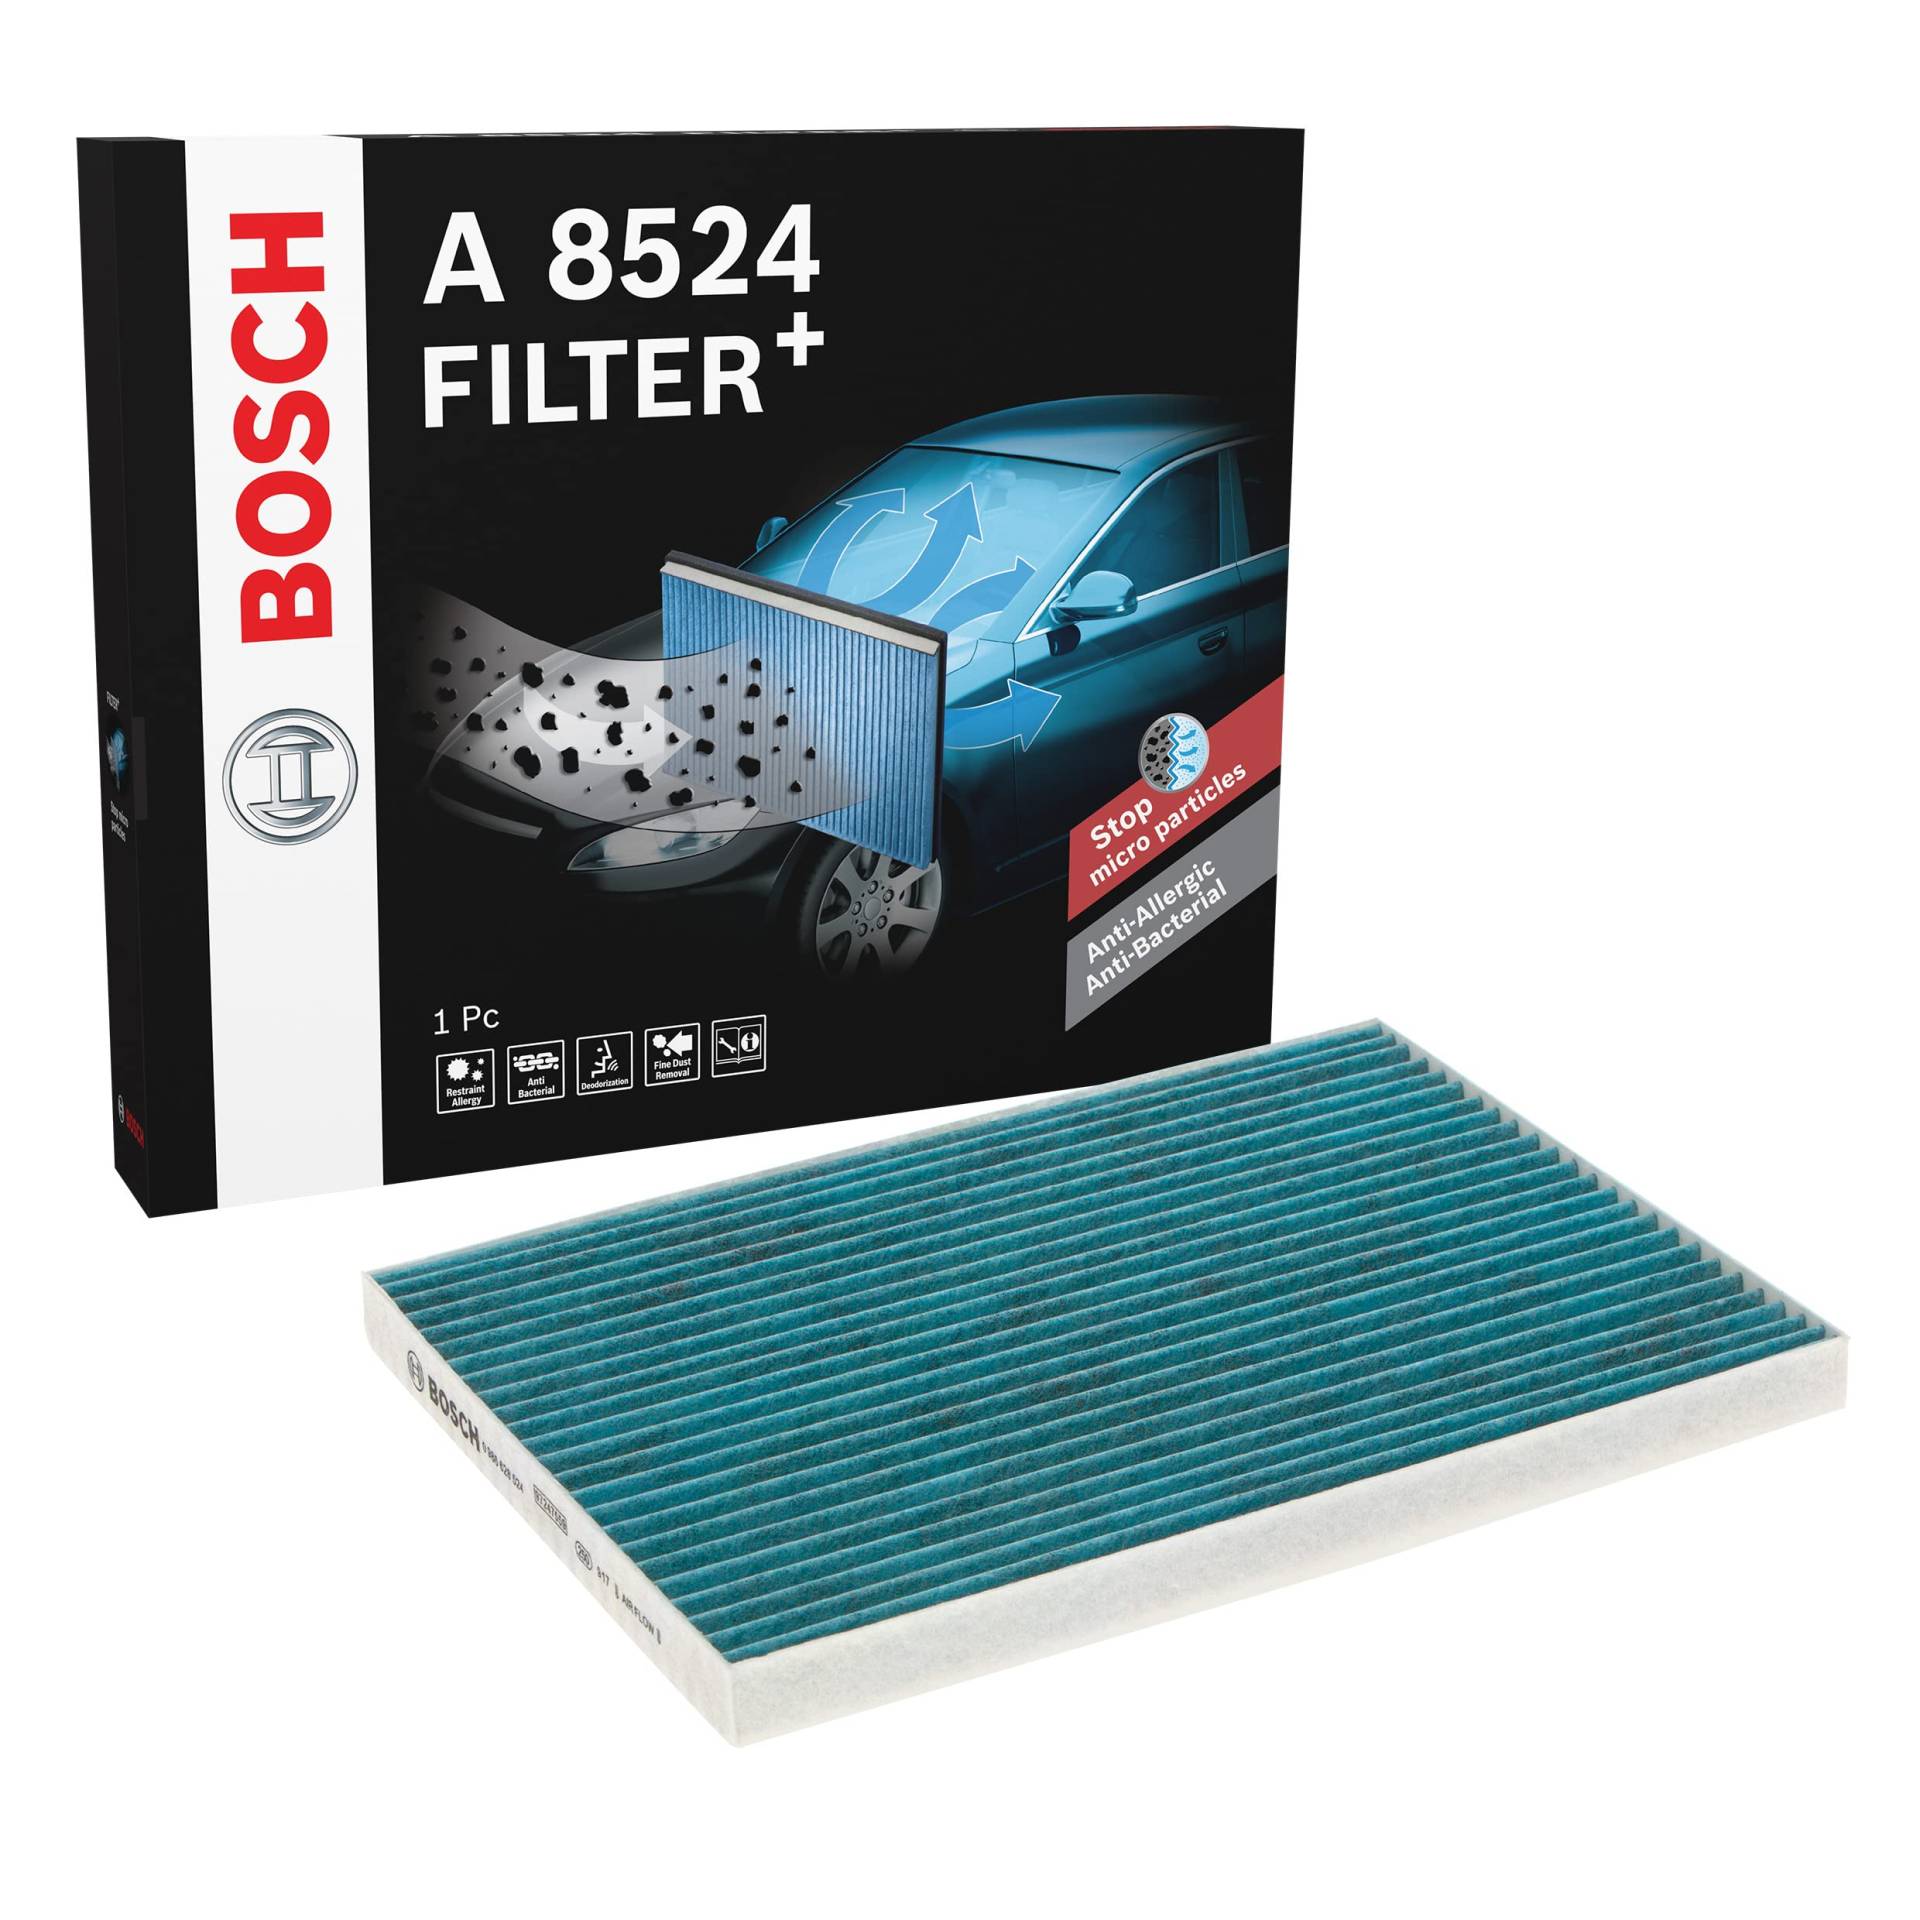 Bosch A8524 - Innenraumfilter Filter+ von Bosch Automotive